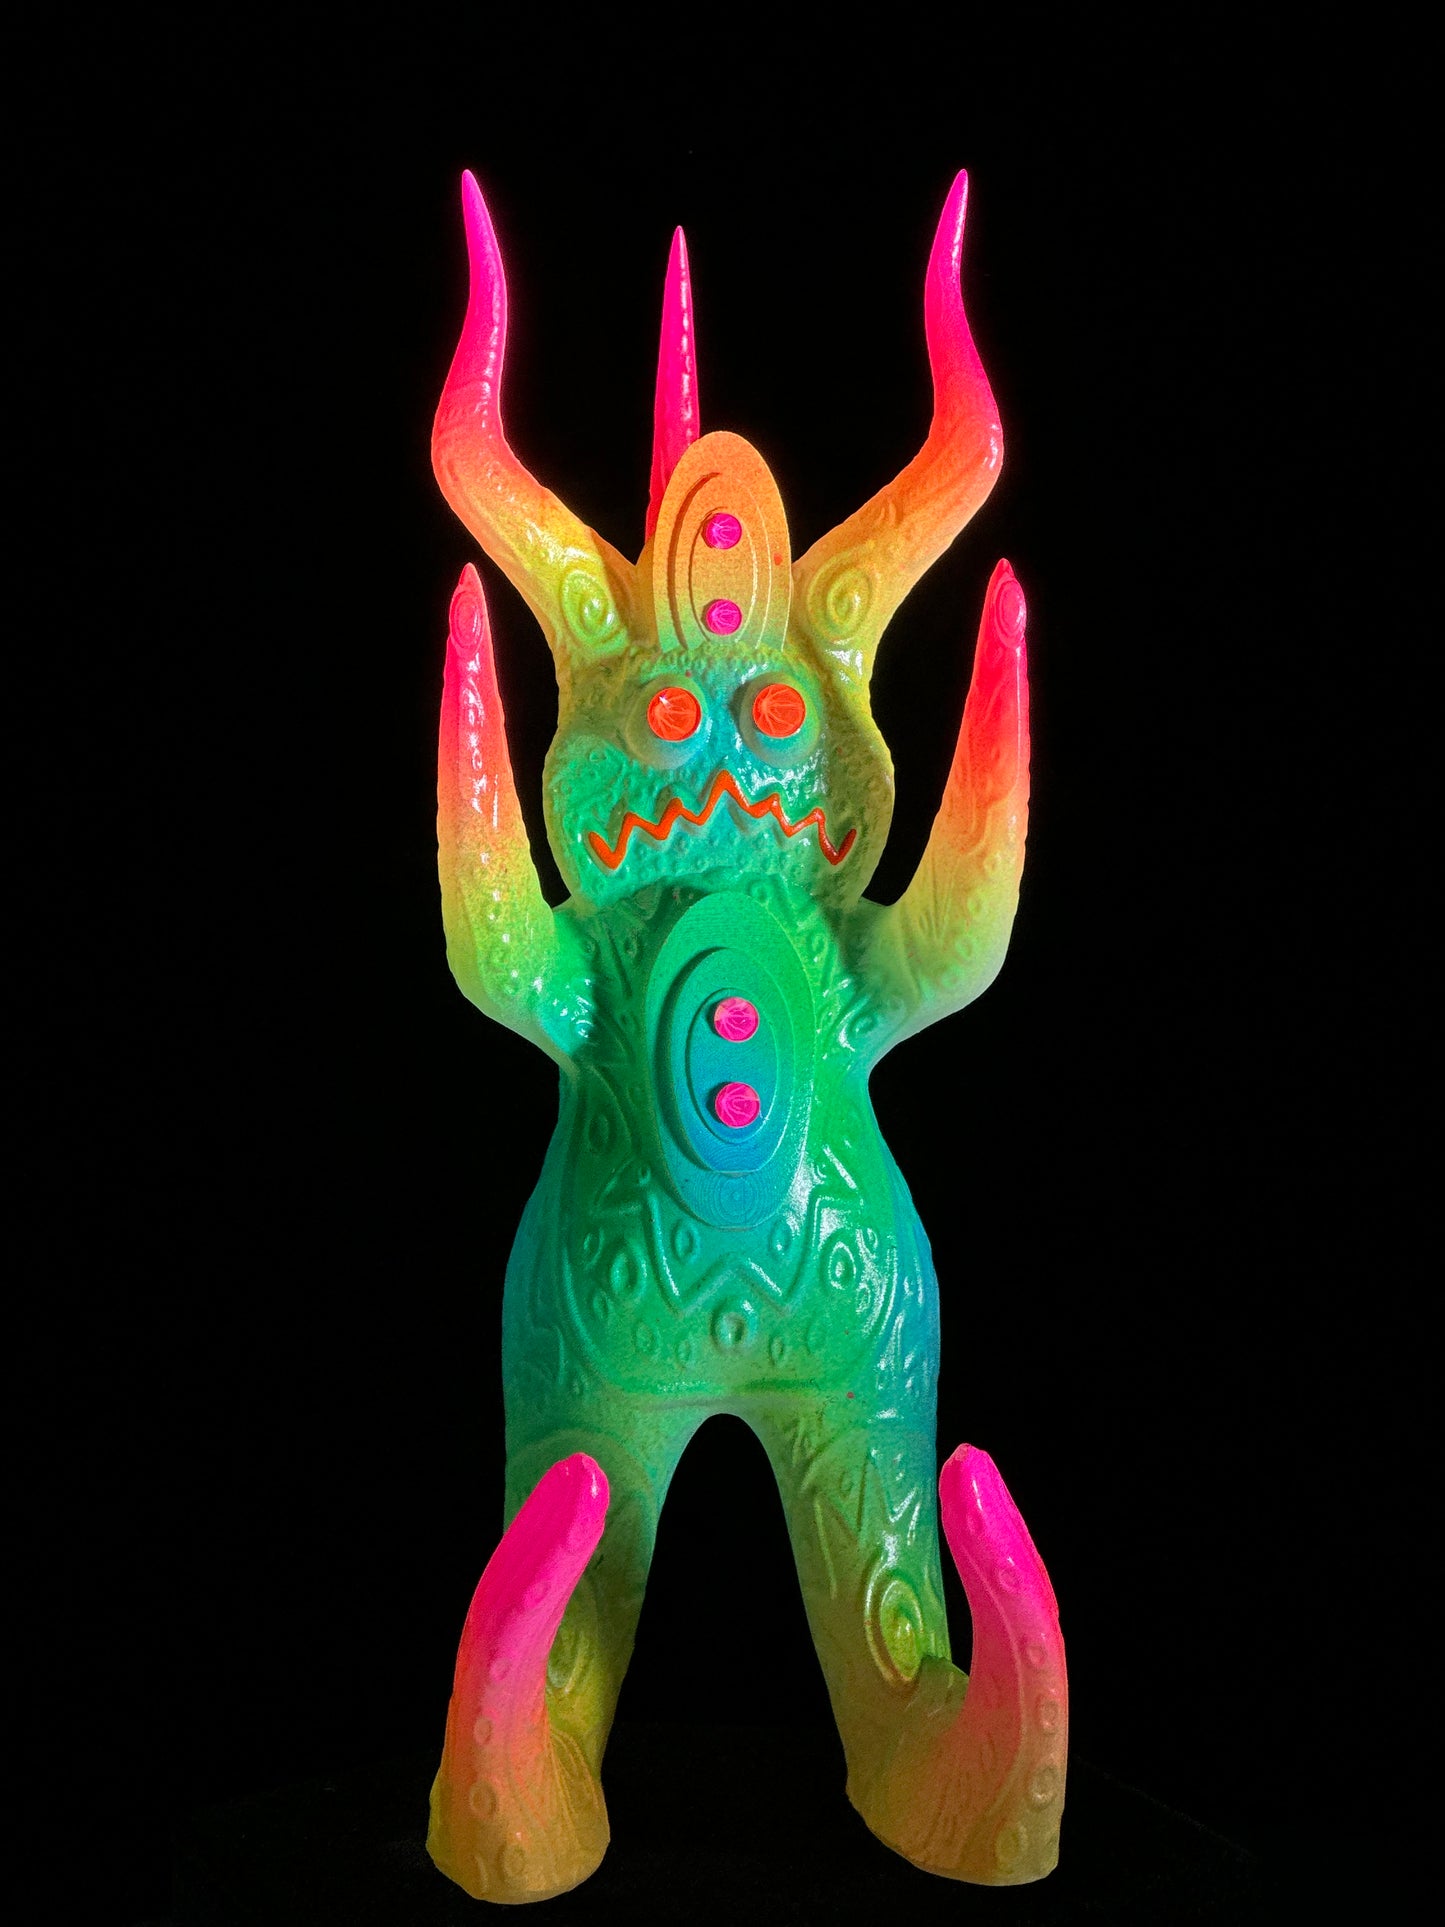 The Devil: Neon Countdown to Doom